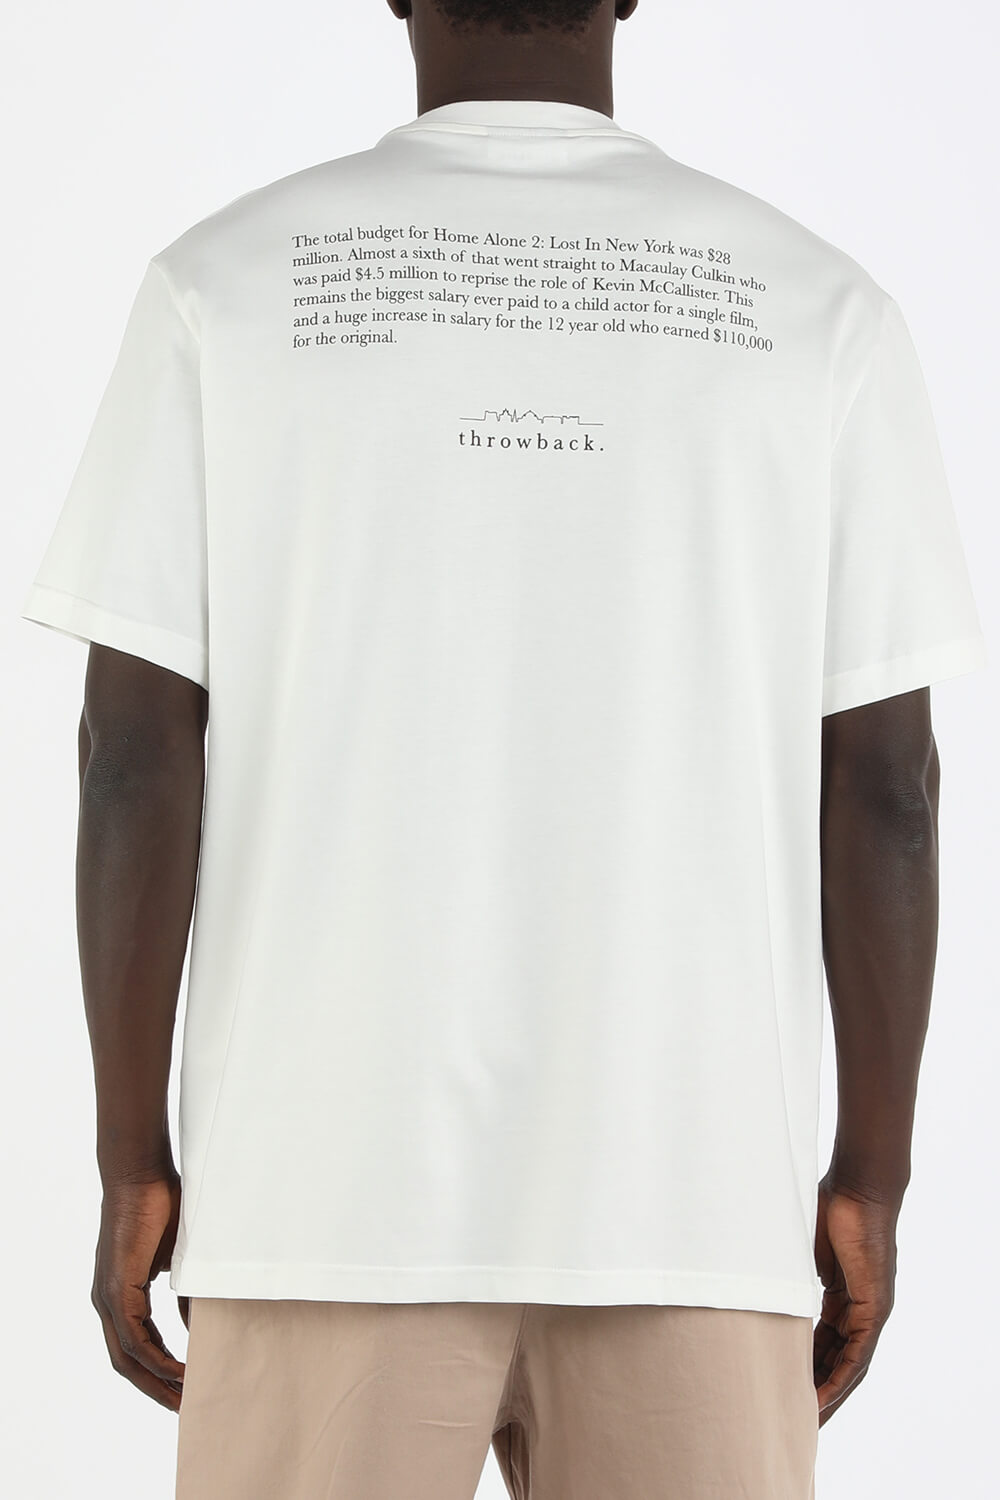 Kevin Print Tshirt in White THROWBACK